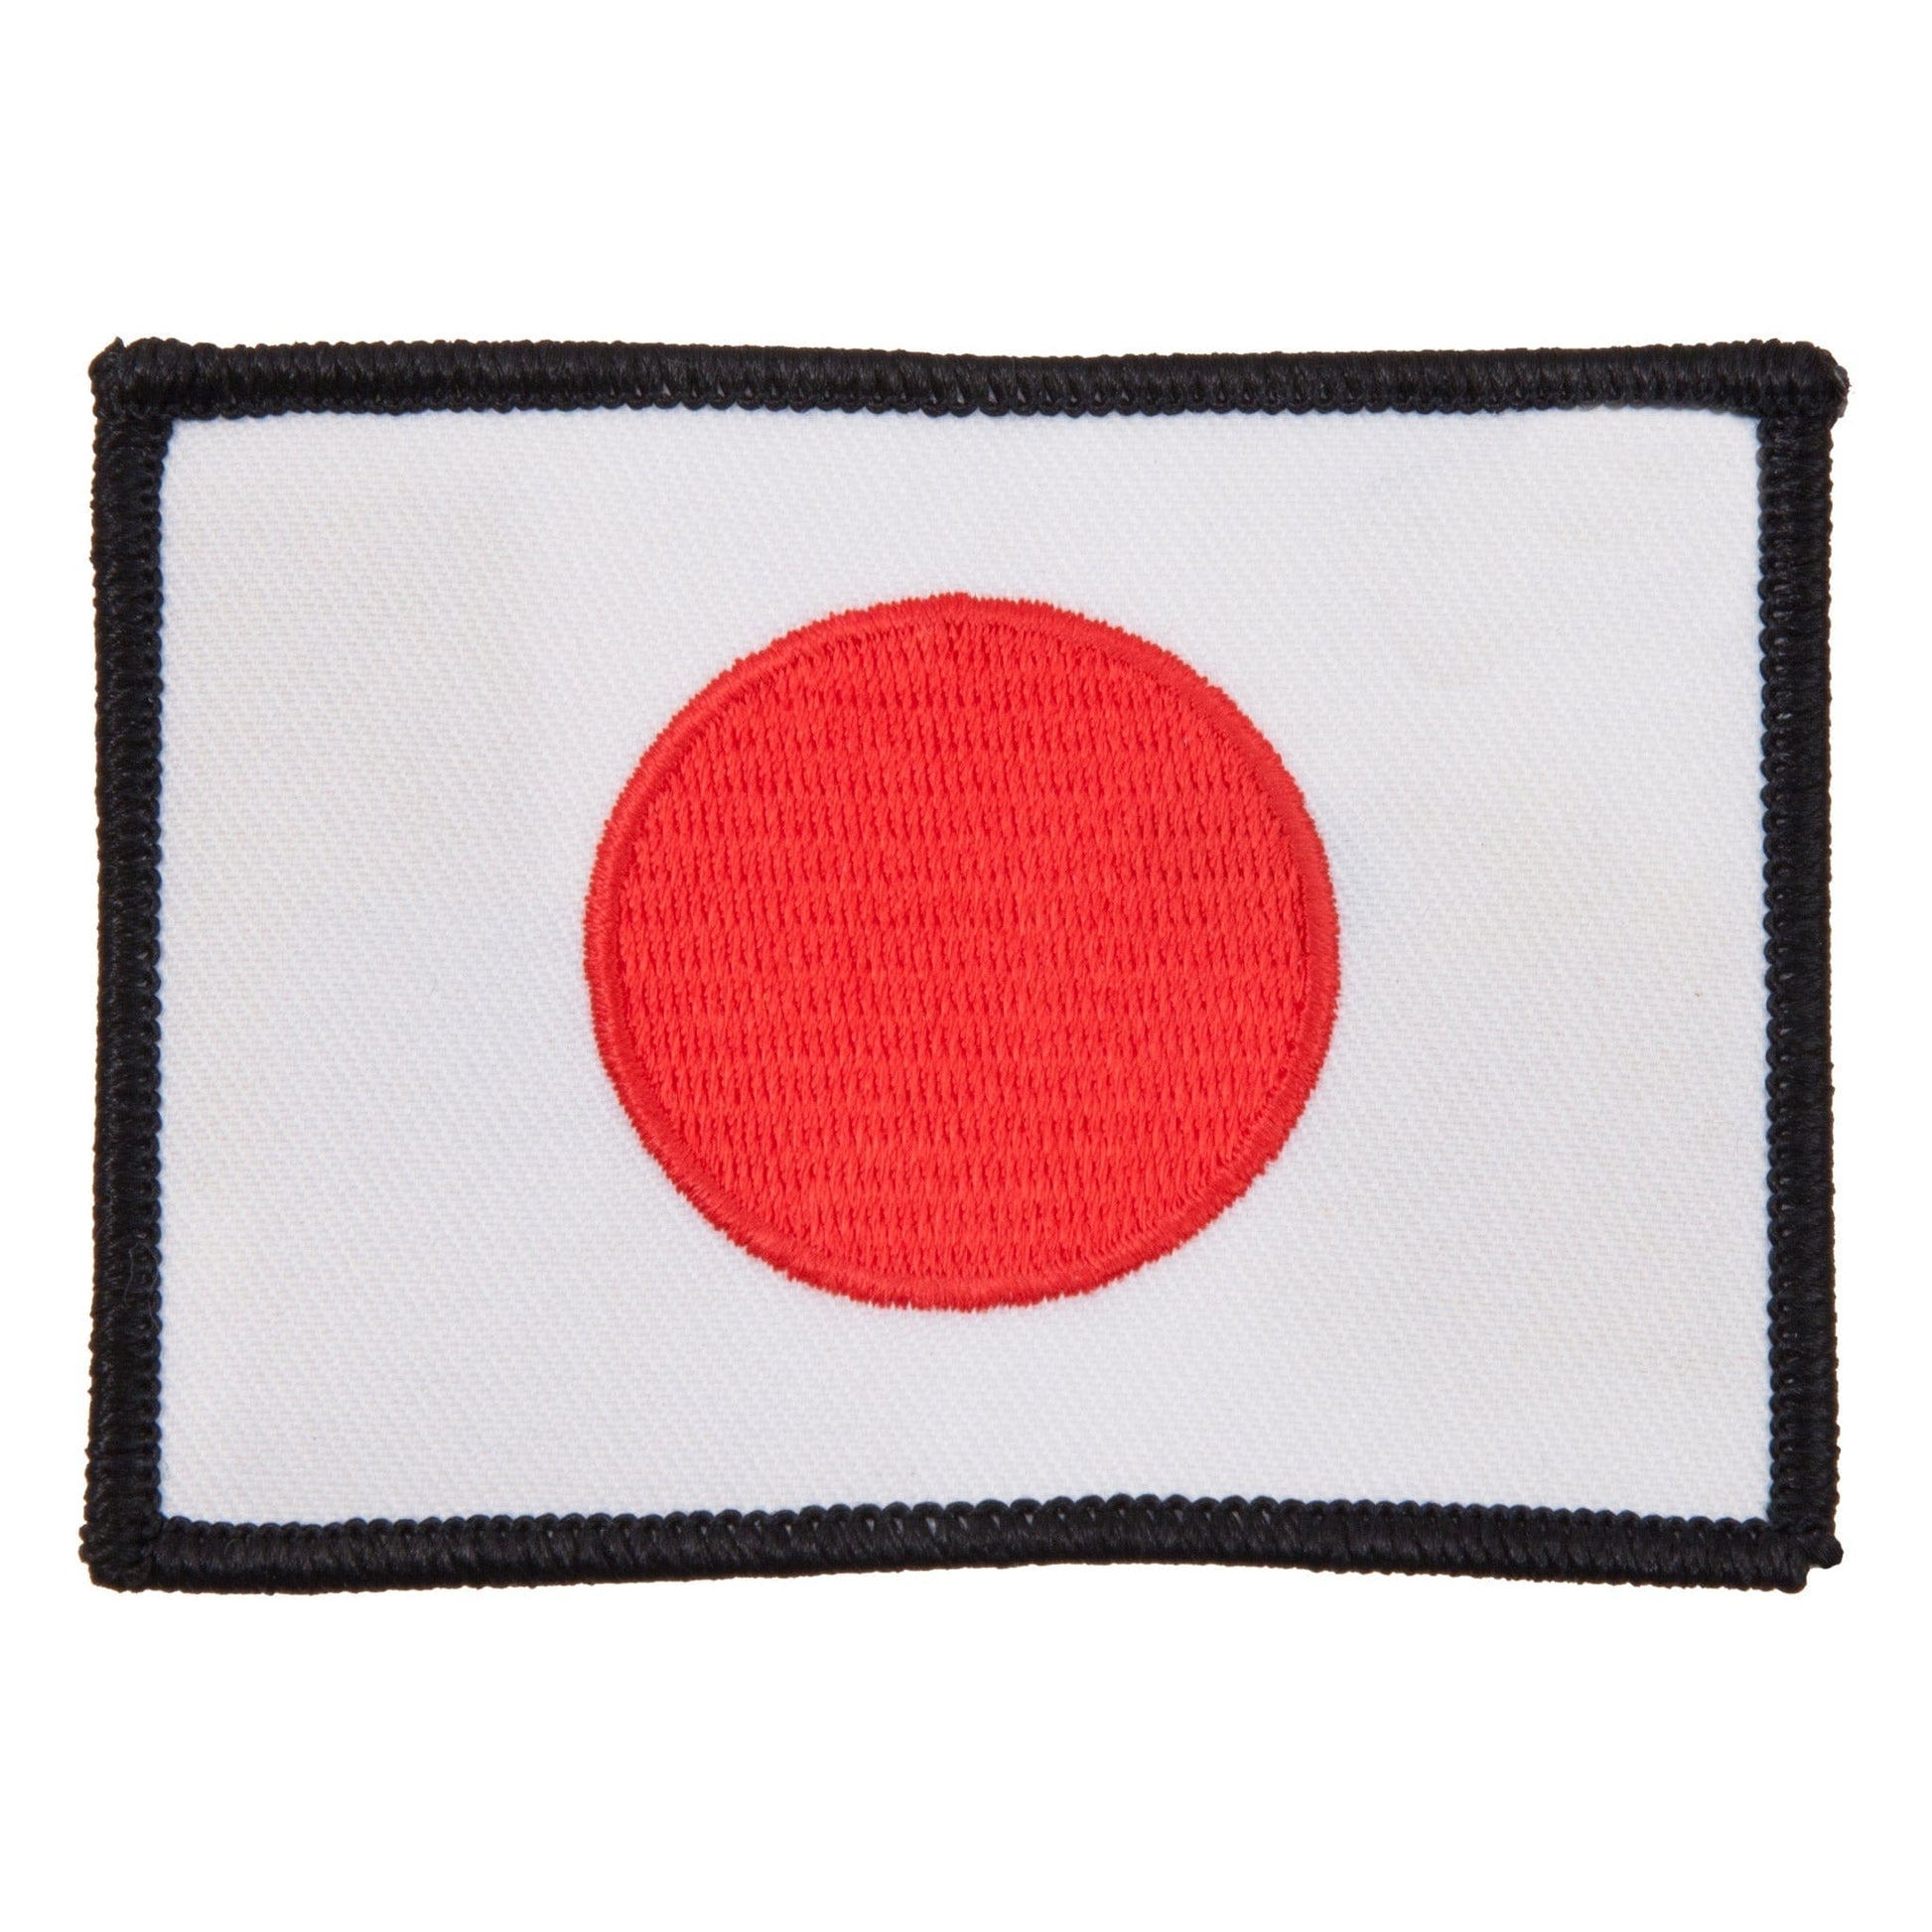 EclipseMartialArtsSupplies sporting goods Japan Flag Patch black border Martial Arts Uniform Patch